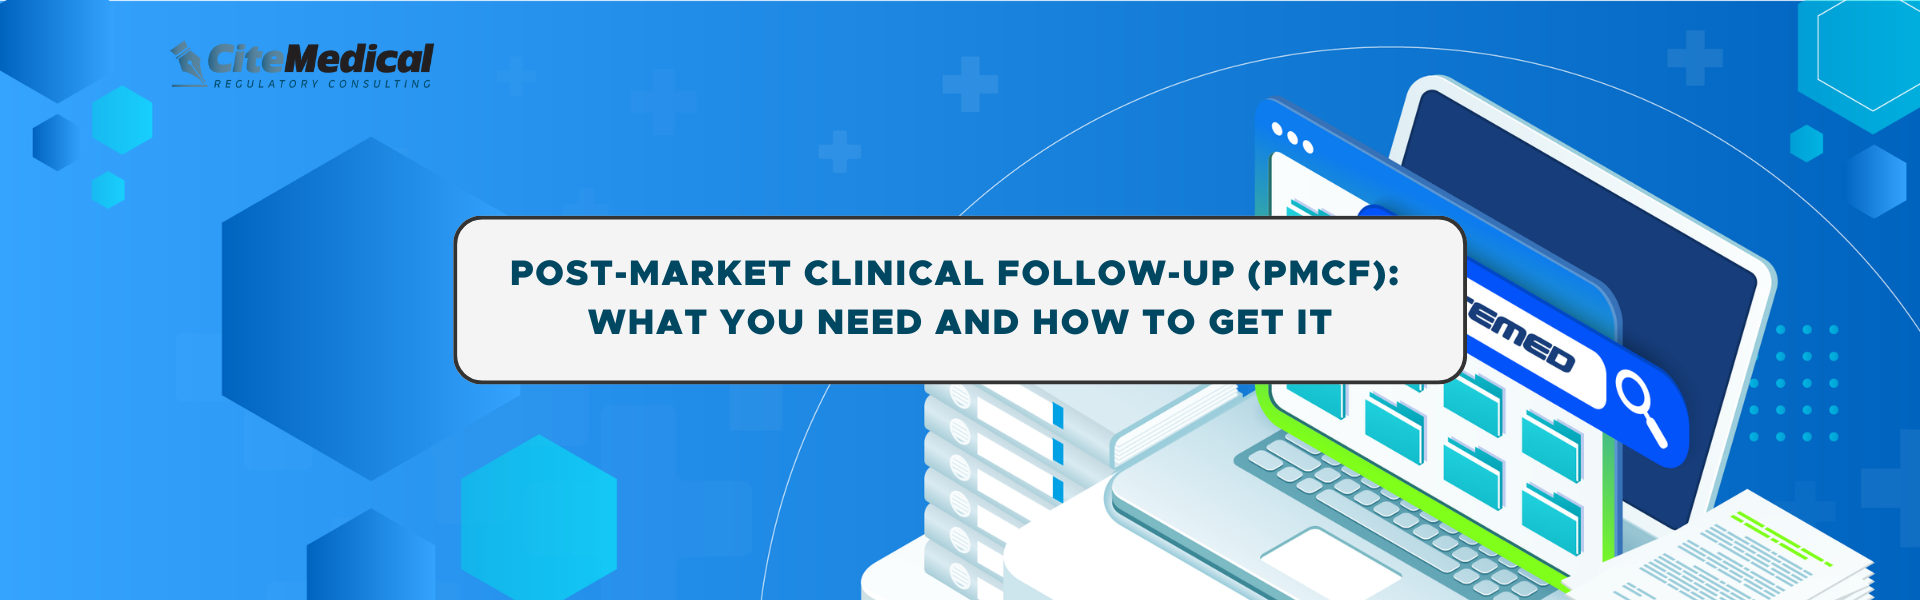 Post-market Clinical Follow-up